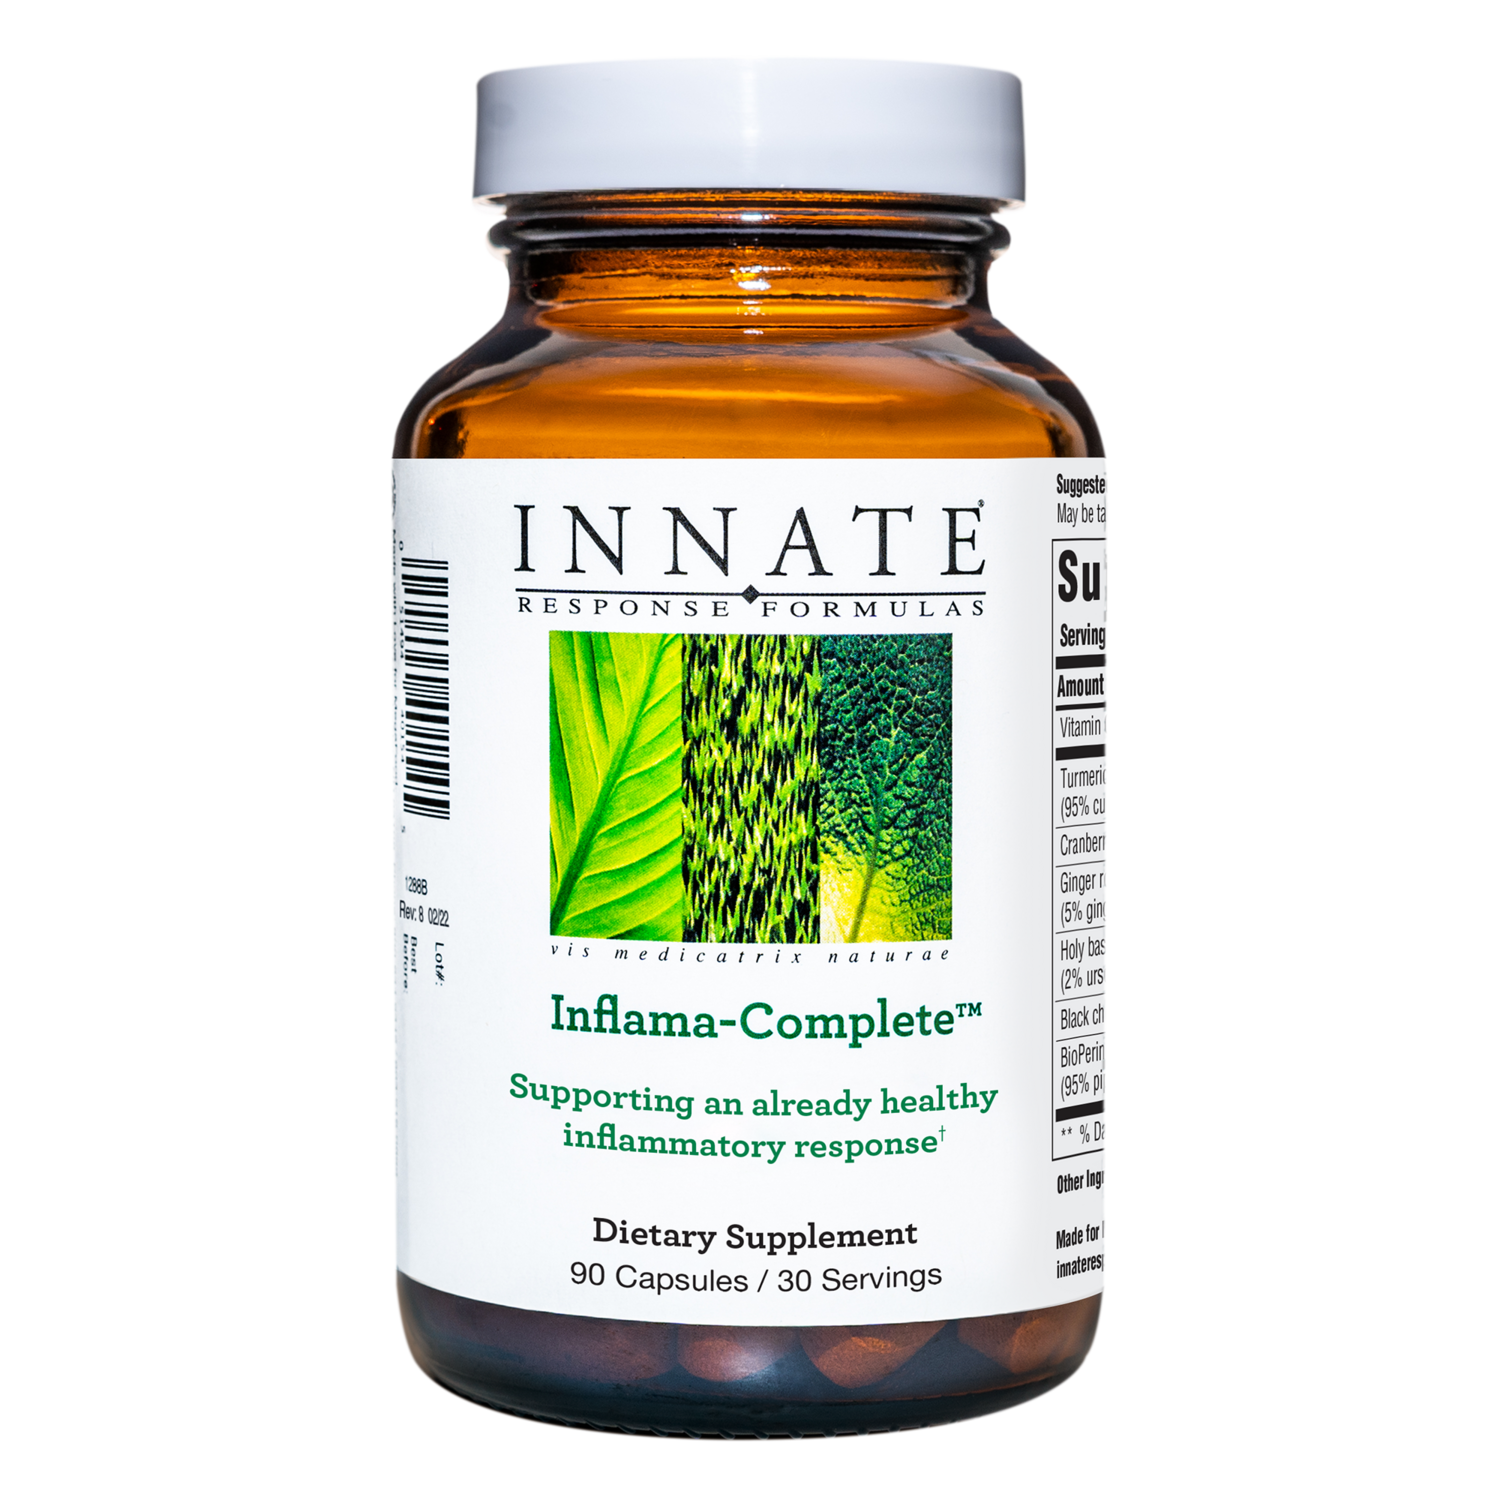 Inflama-Complete 90 capsules Innate Response